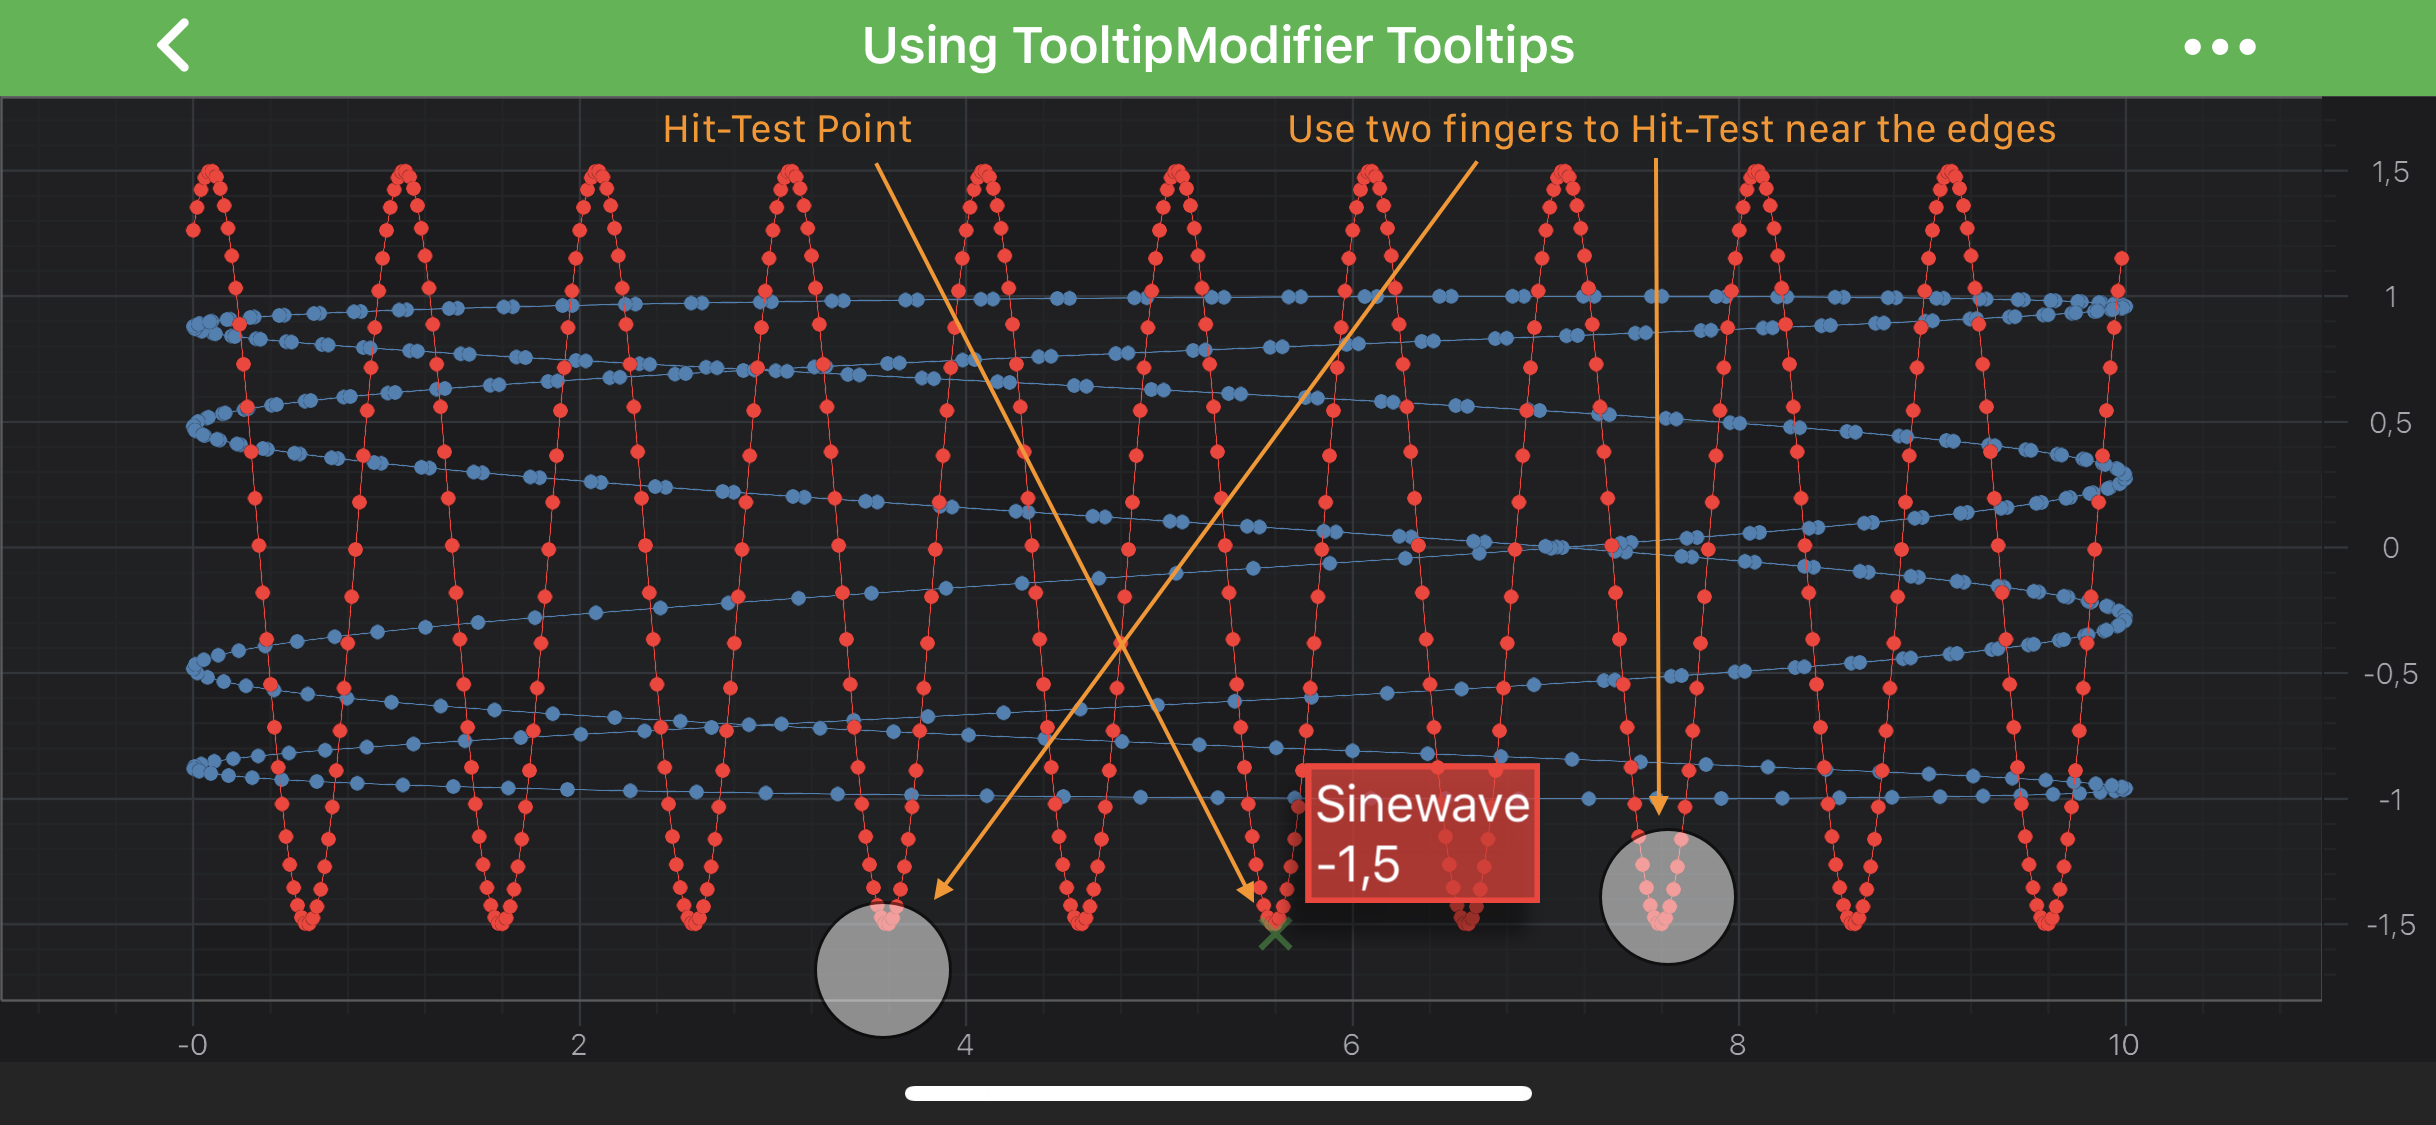 Tooltip Modifier Usage Near Edge